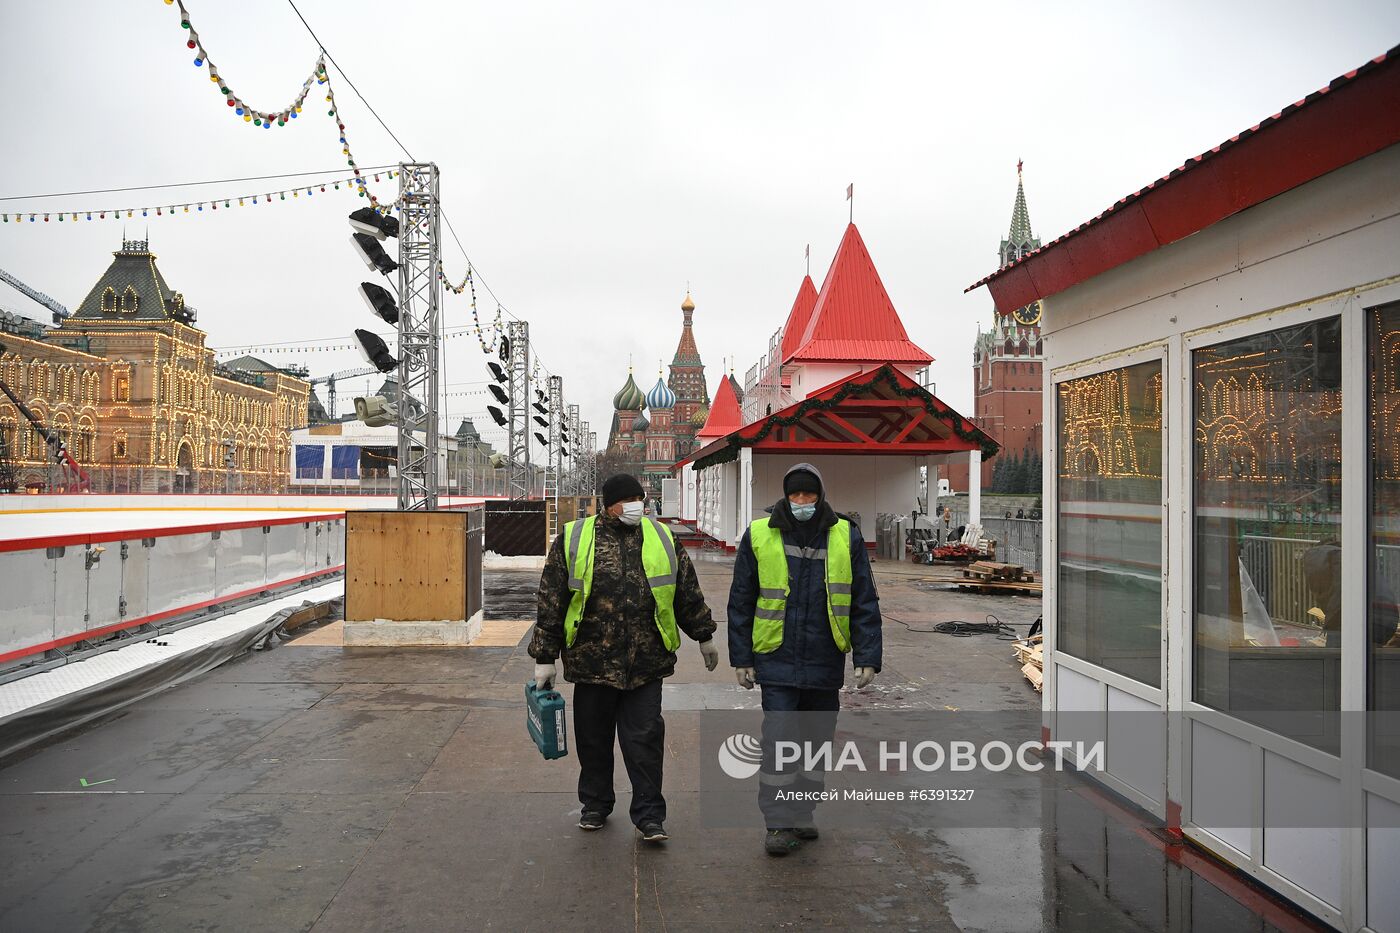 Заливка ГУМ-катка на Красной площади